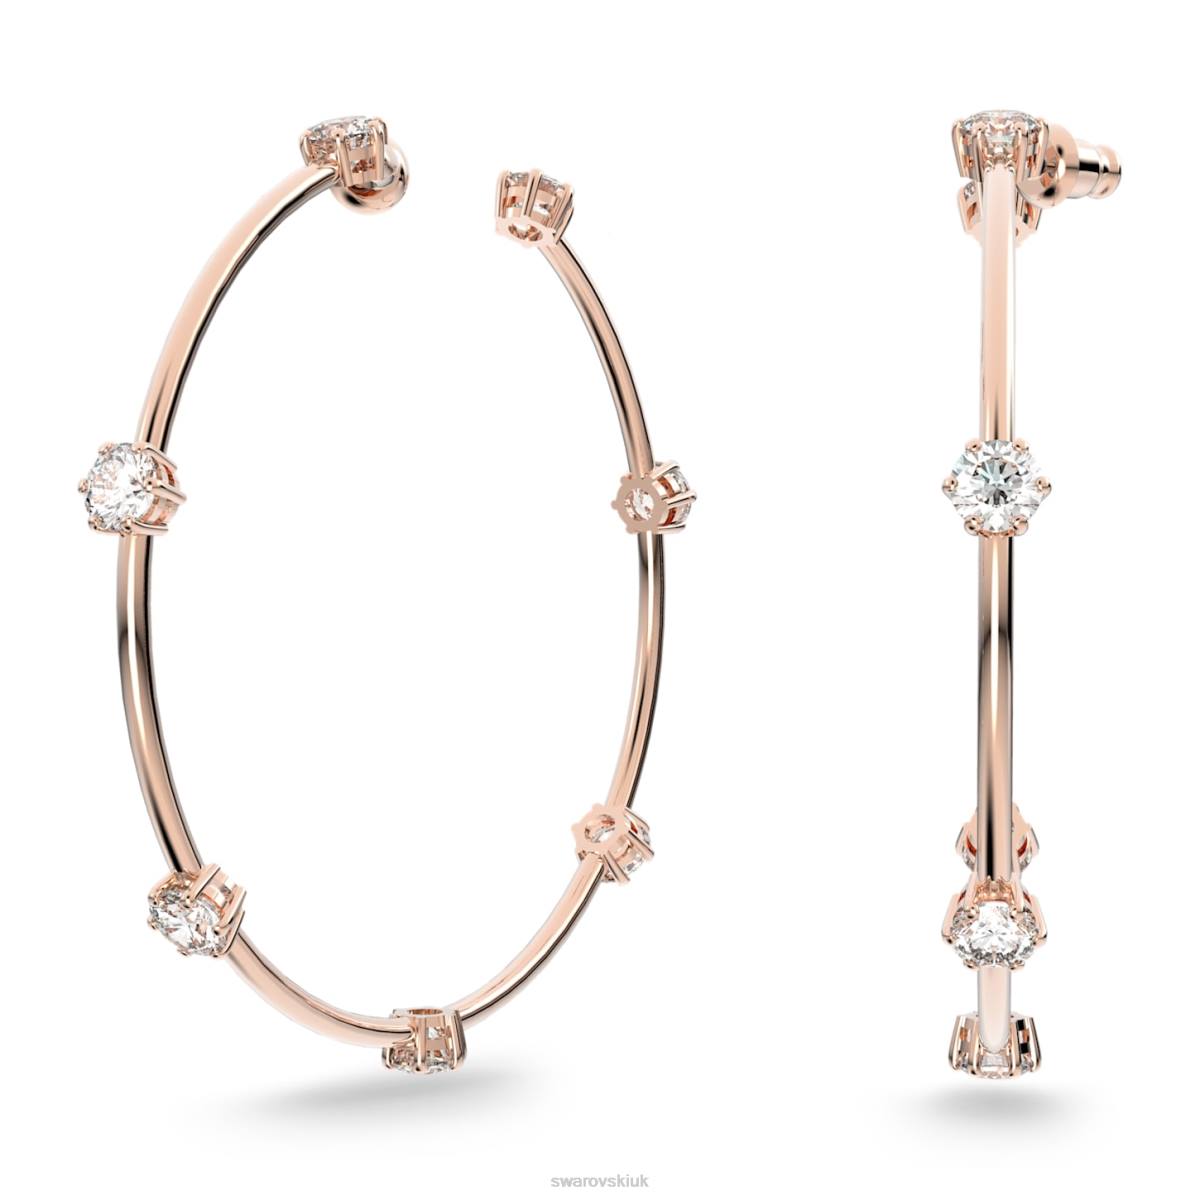 Jewelry Swarovski Constella hoop earrings Round cut, White, Rose gold-tone plated 48JX889